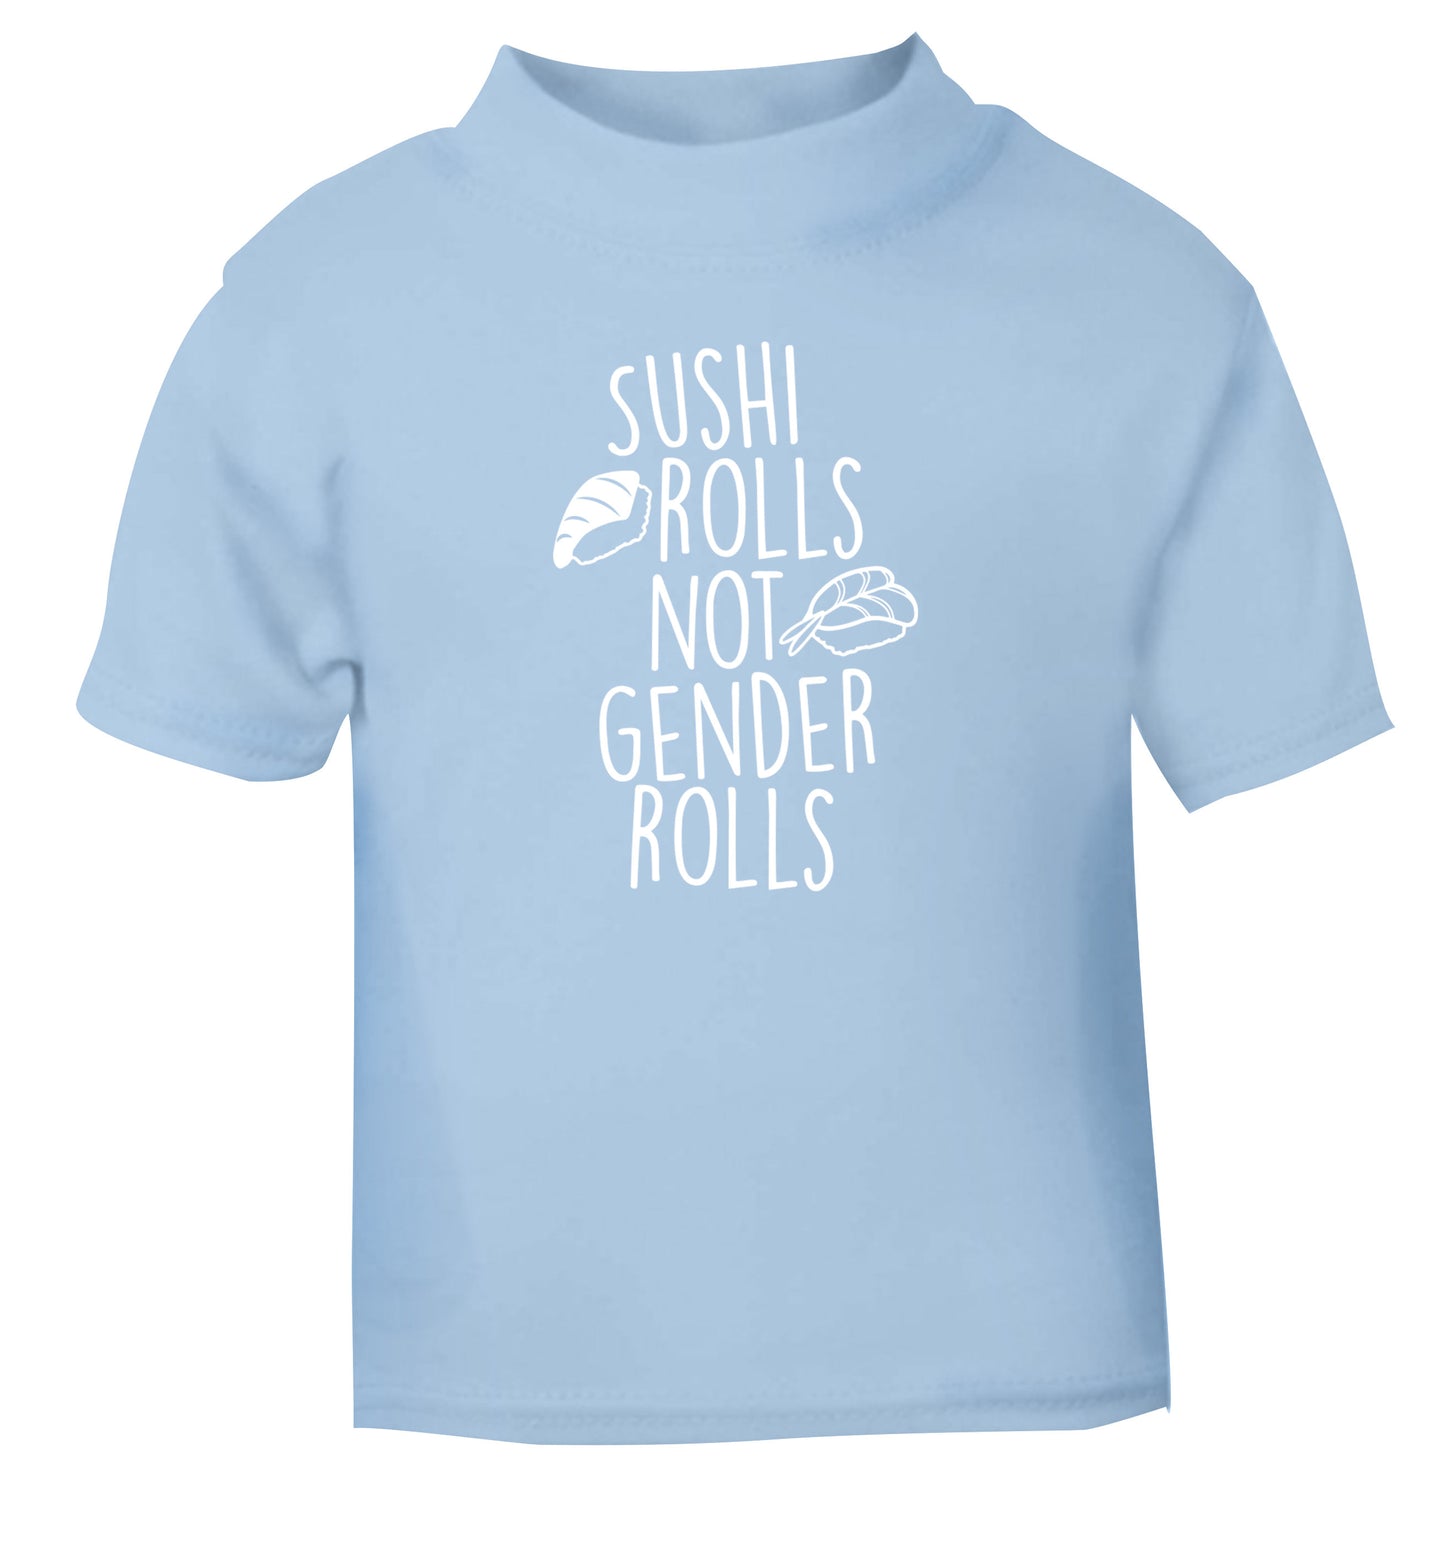 Sushi rolls not gender rolls light blue Baby Toddler Tshirt 2 Years